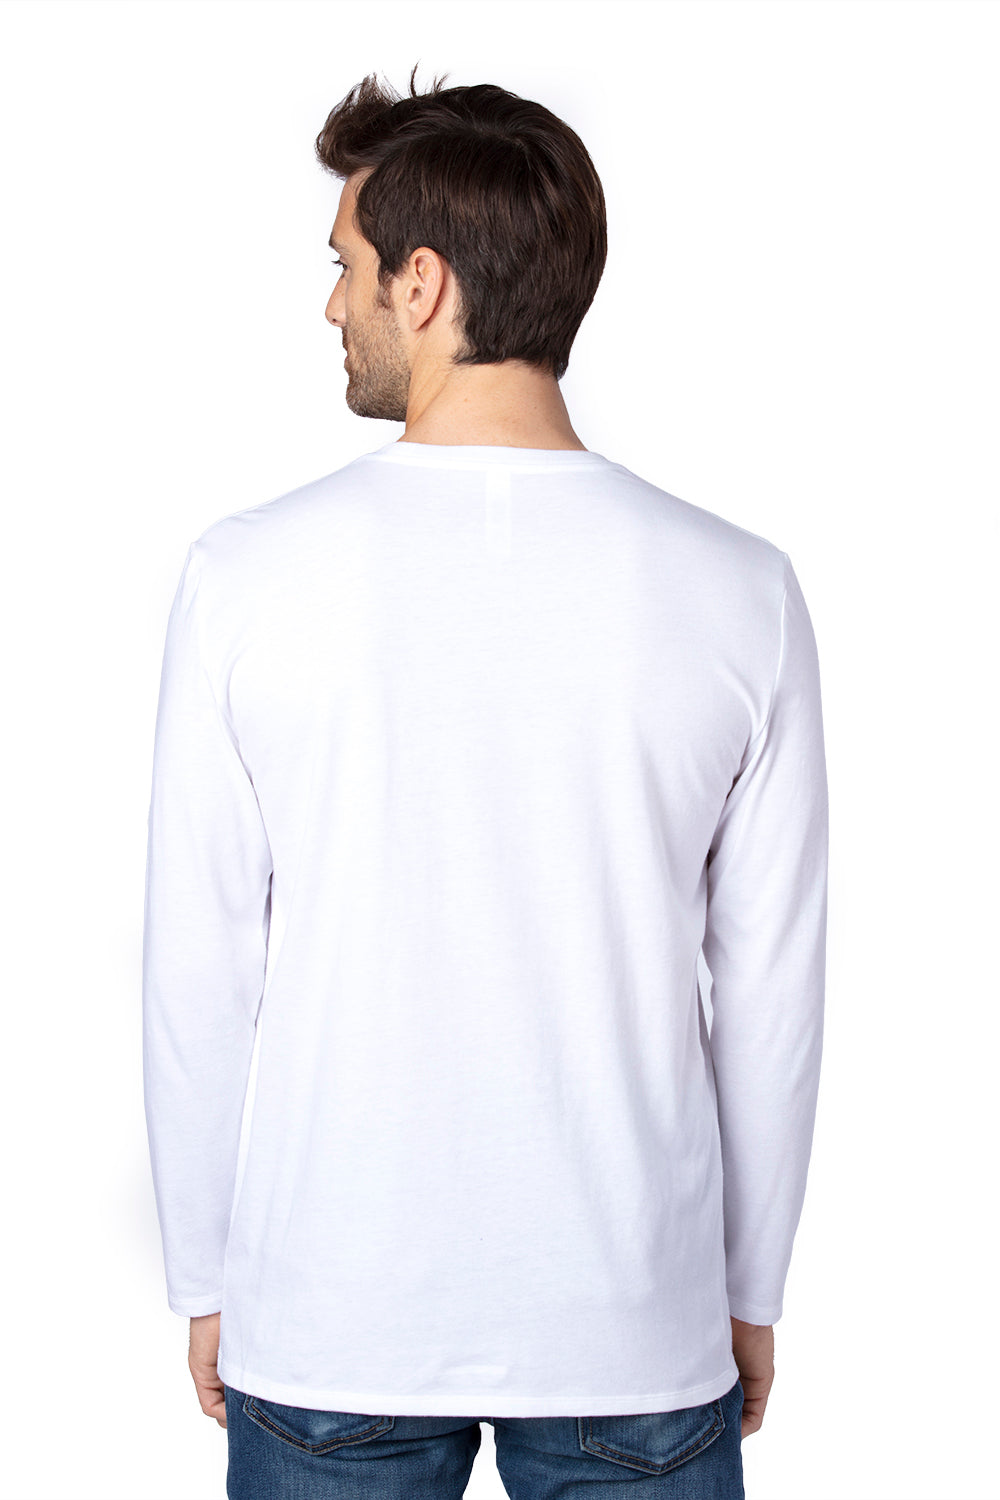 Threadfast Apparel 100LS Mens Ultimate Long Sleeve Crewneck T-Shirt White Back